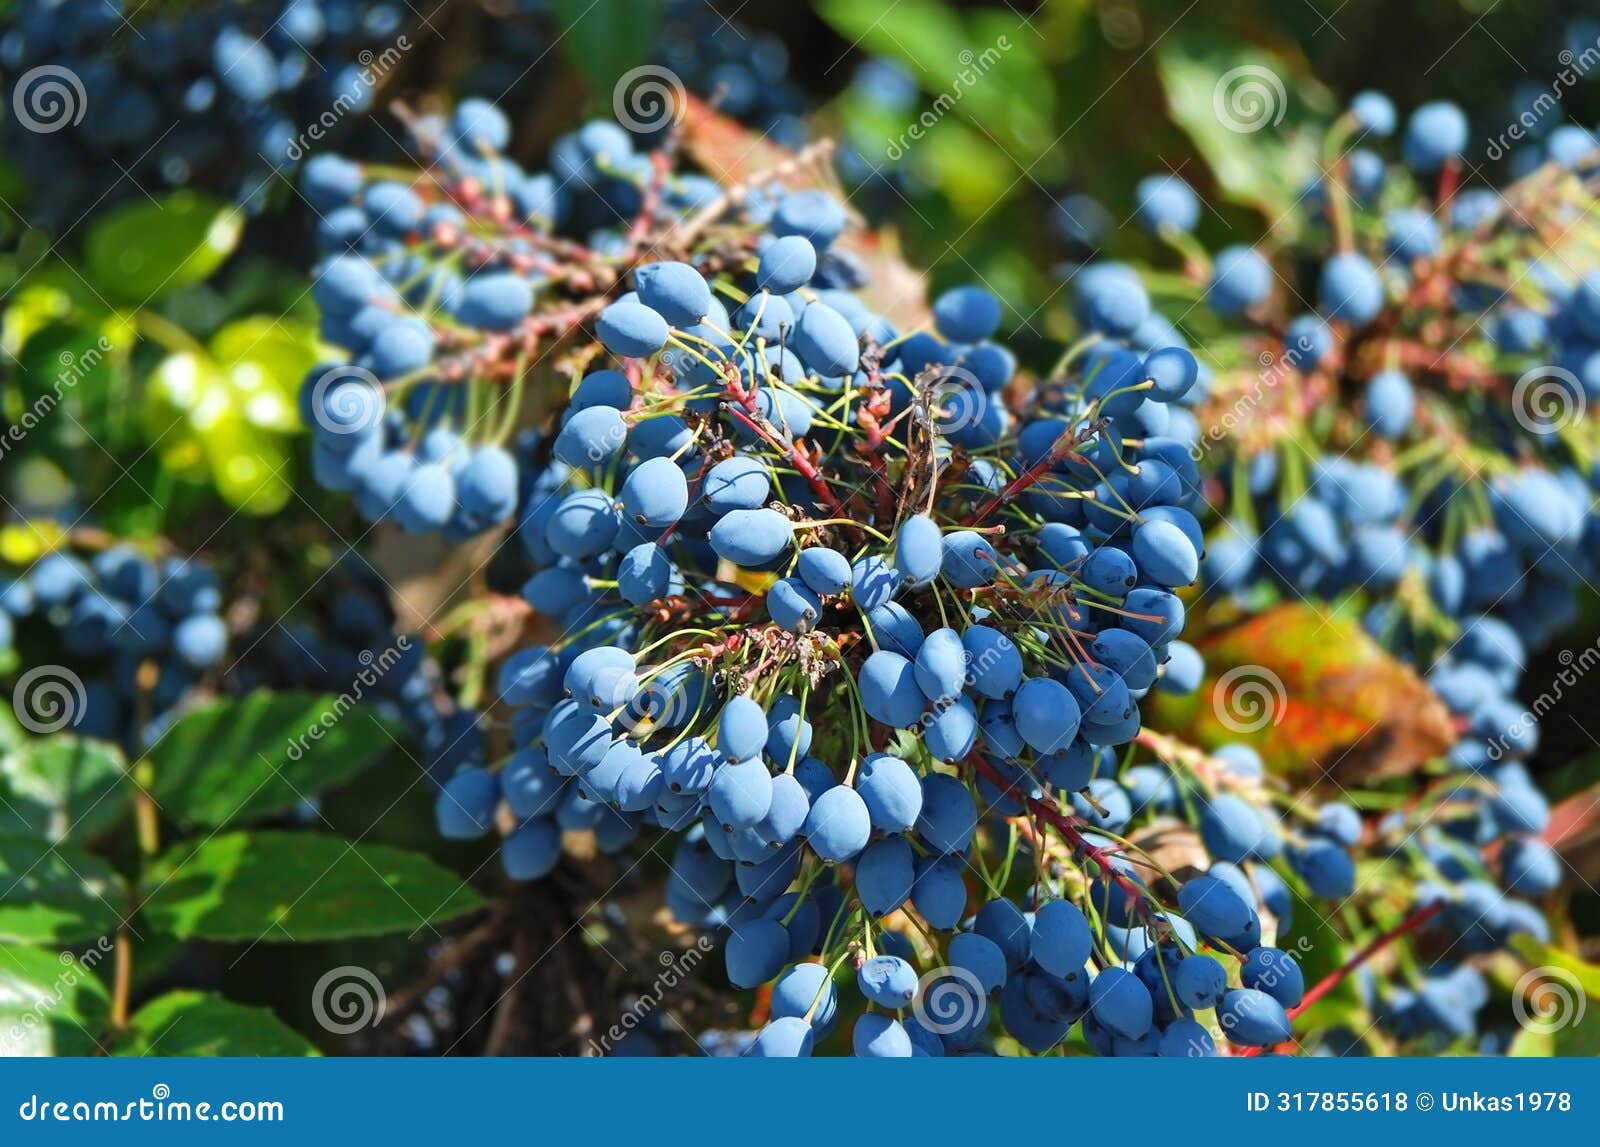 mahonia tree with berries